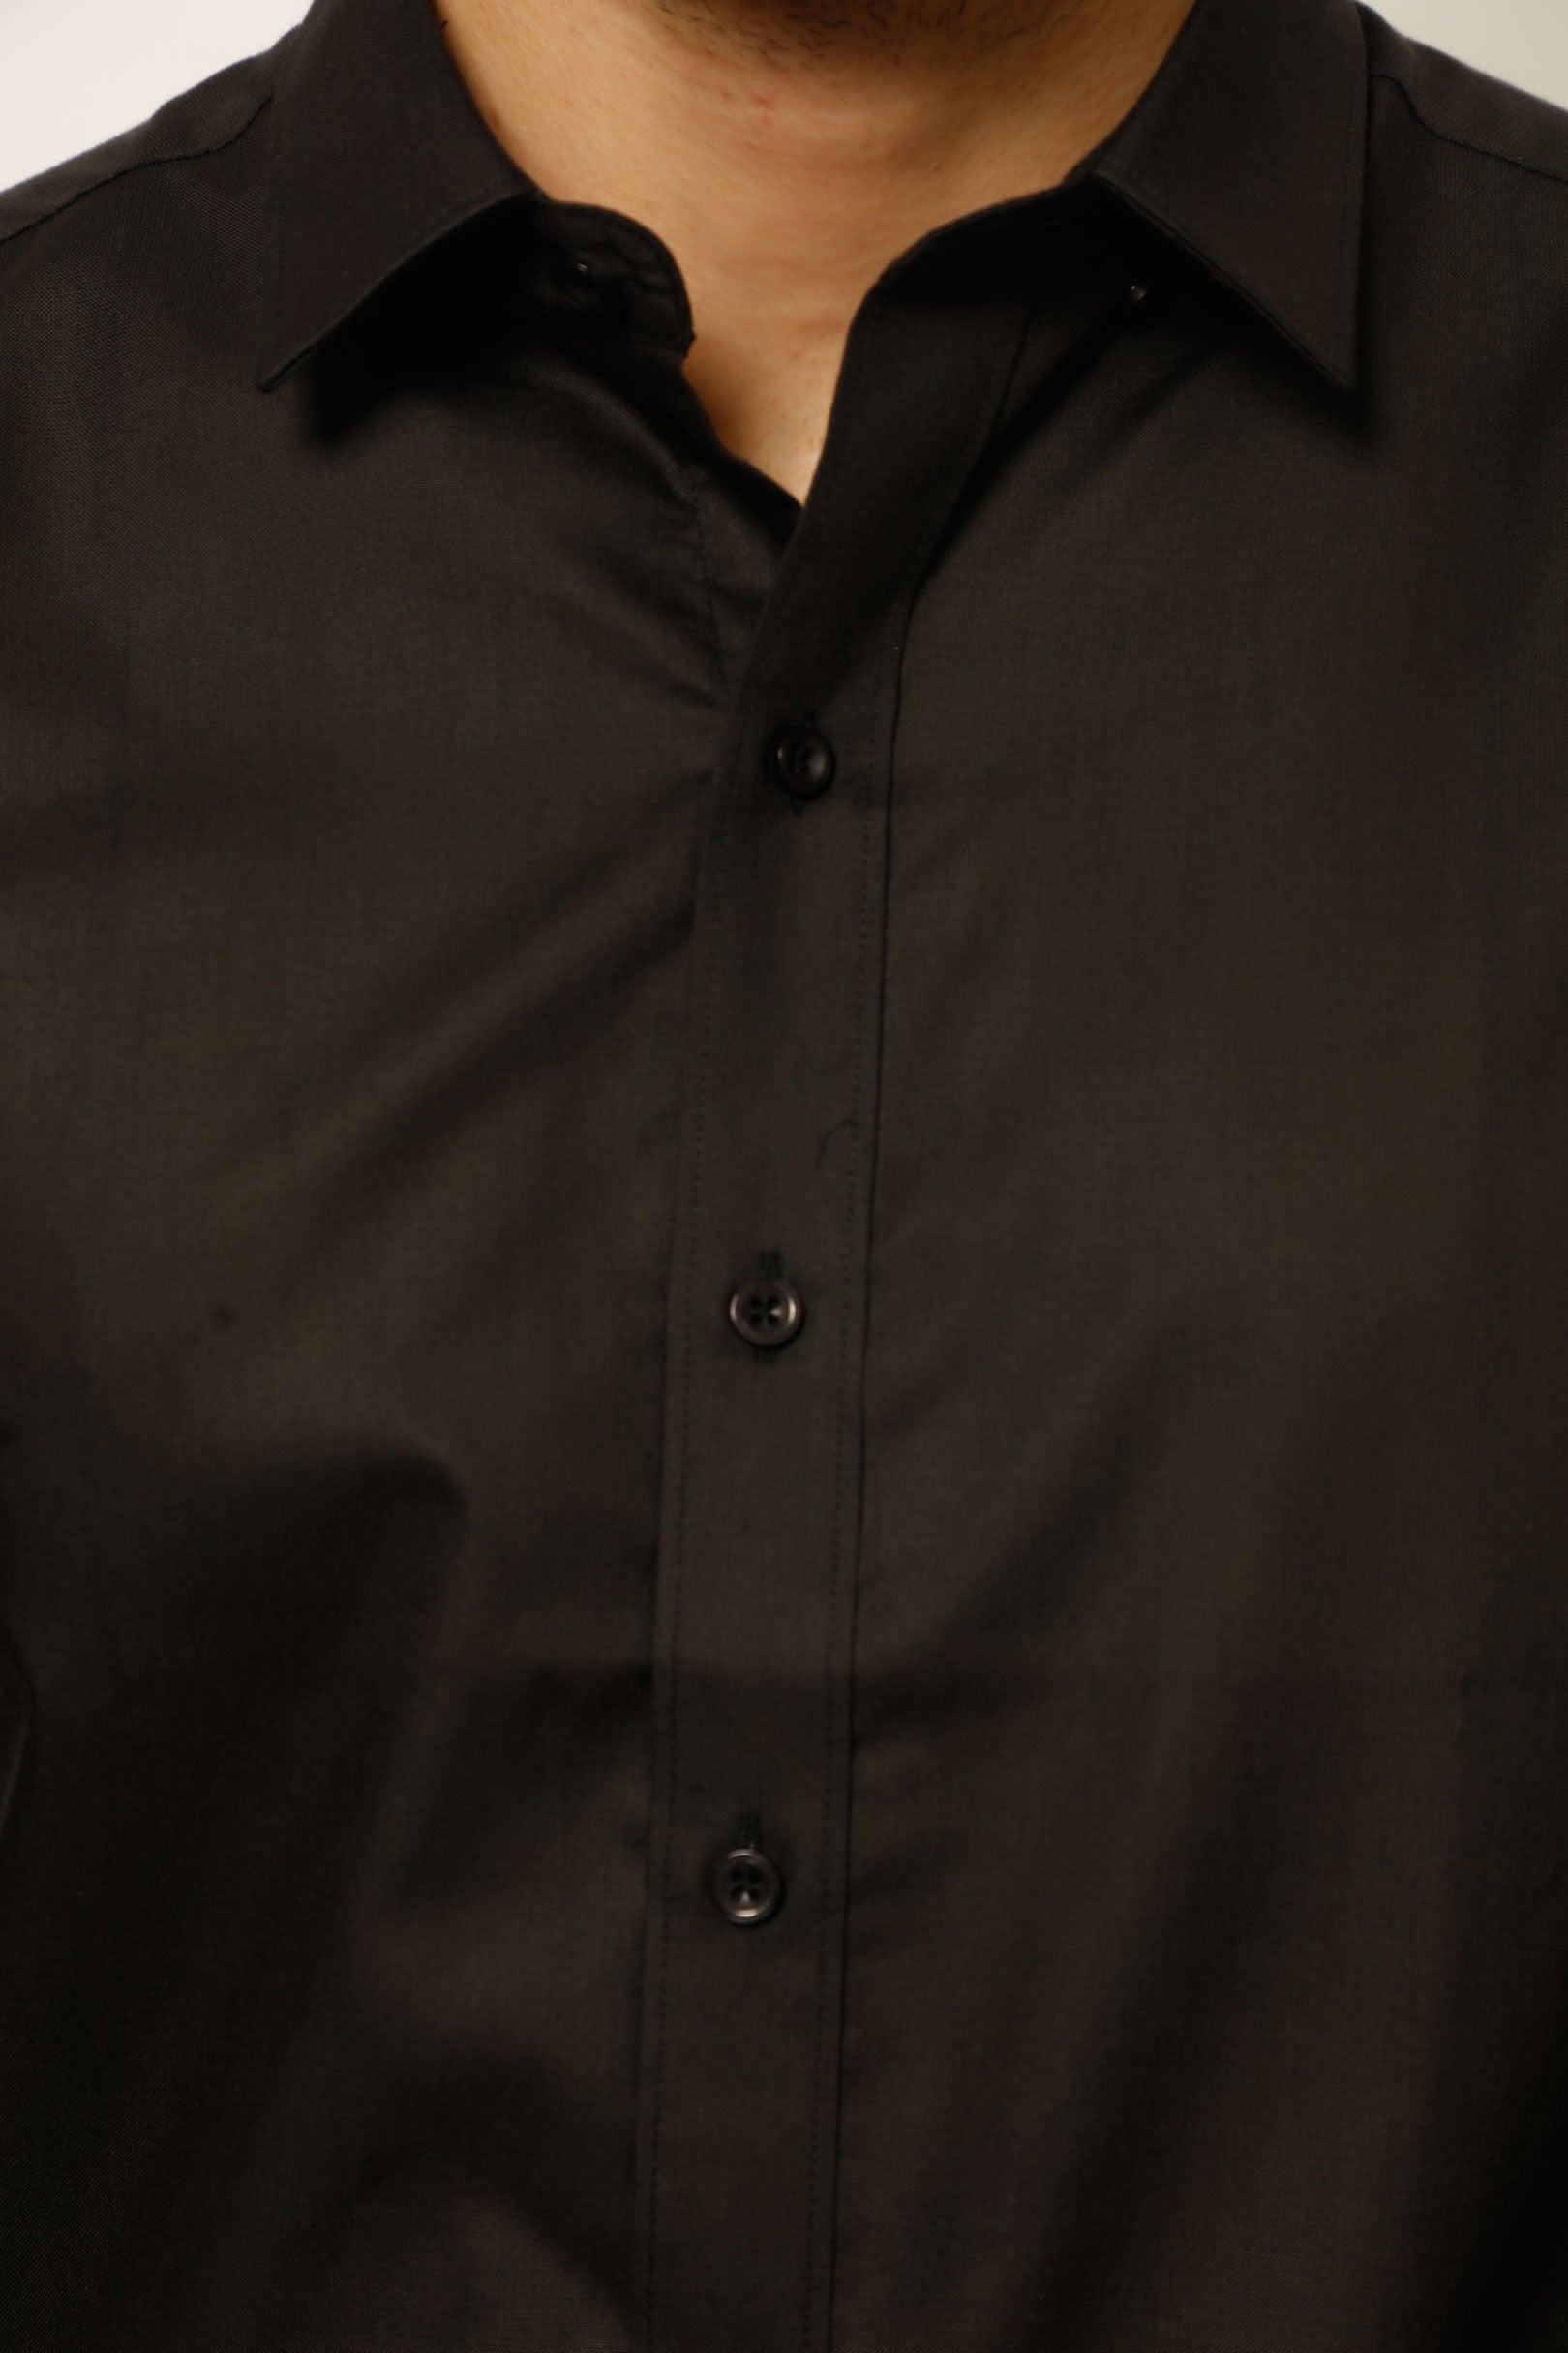 PERFINO URBAN CULTURE FORMALS, SHIRT, CORADO, black, longsleeve, men, shirt, top, coradomoda, coradomoda.com